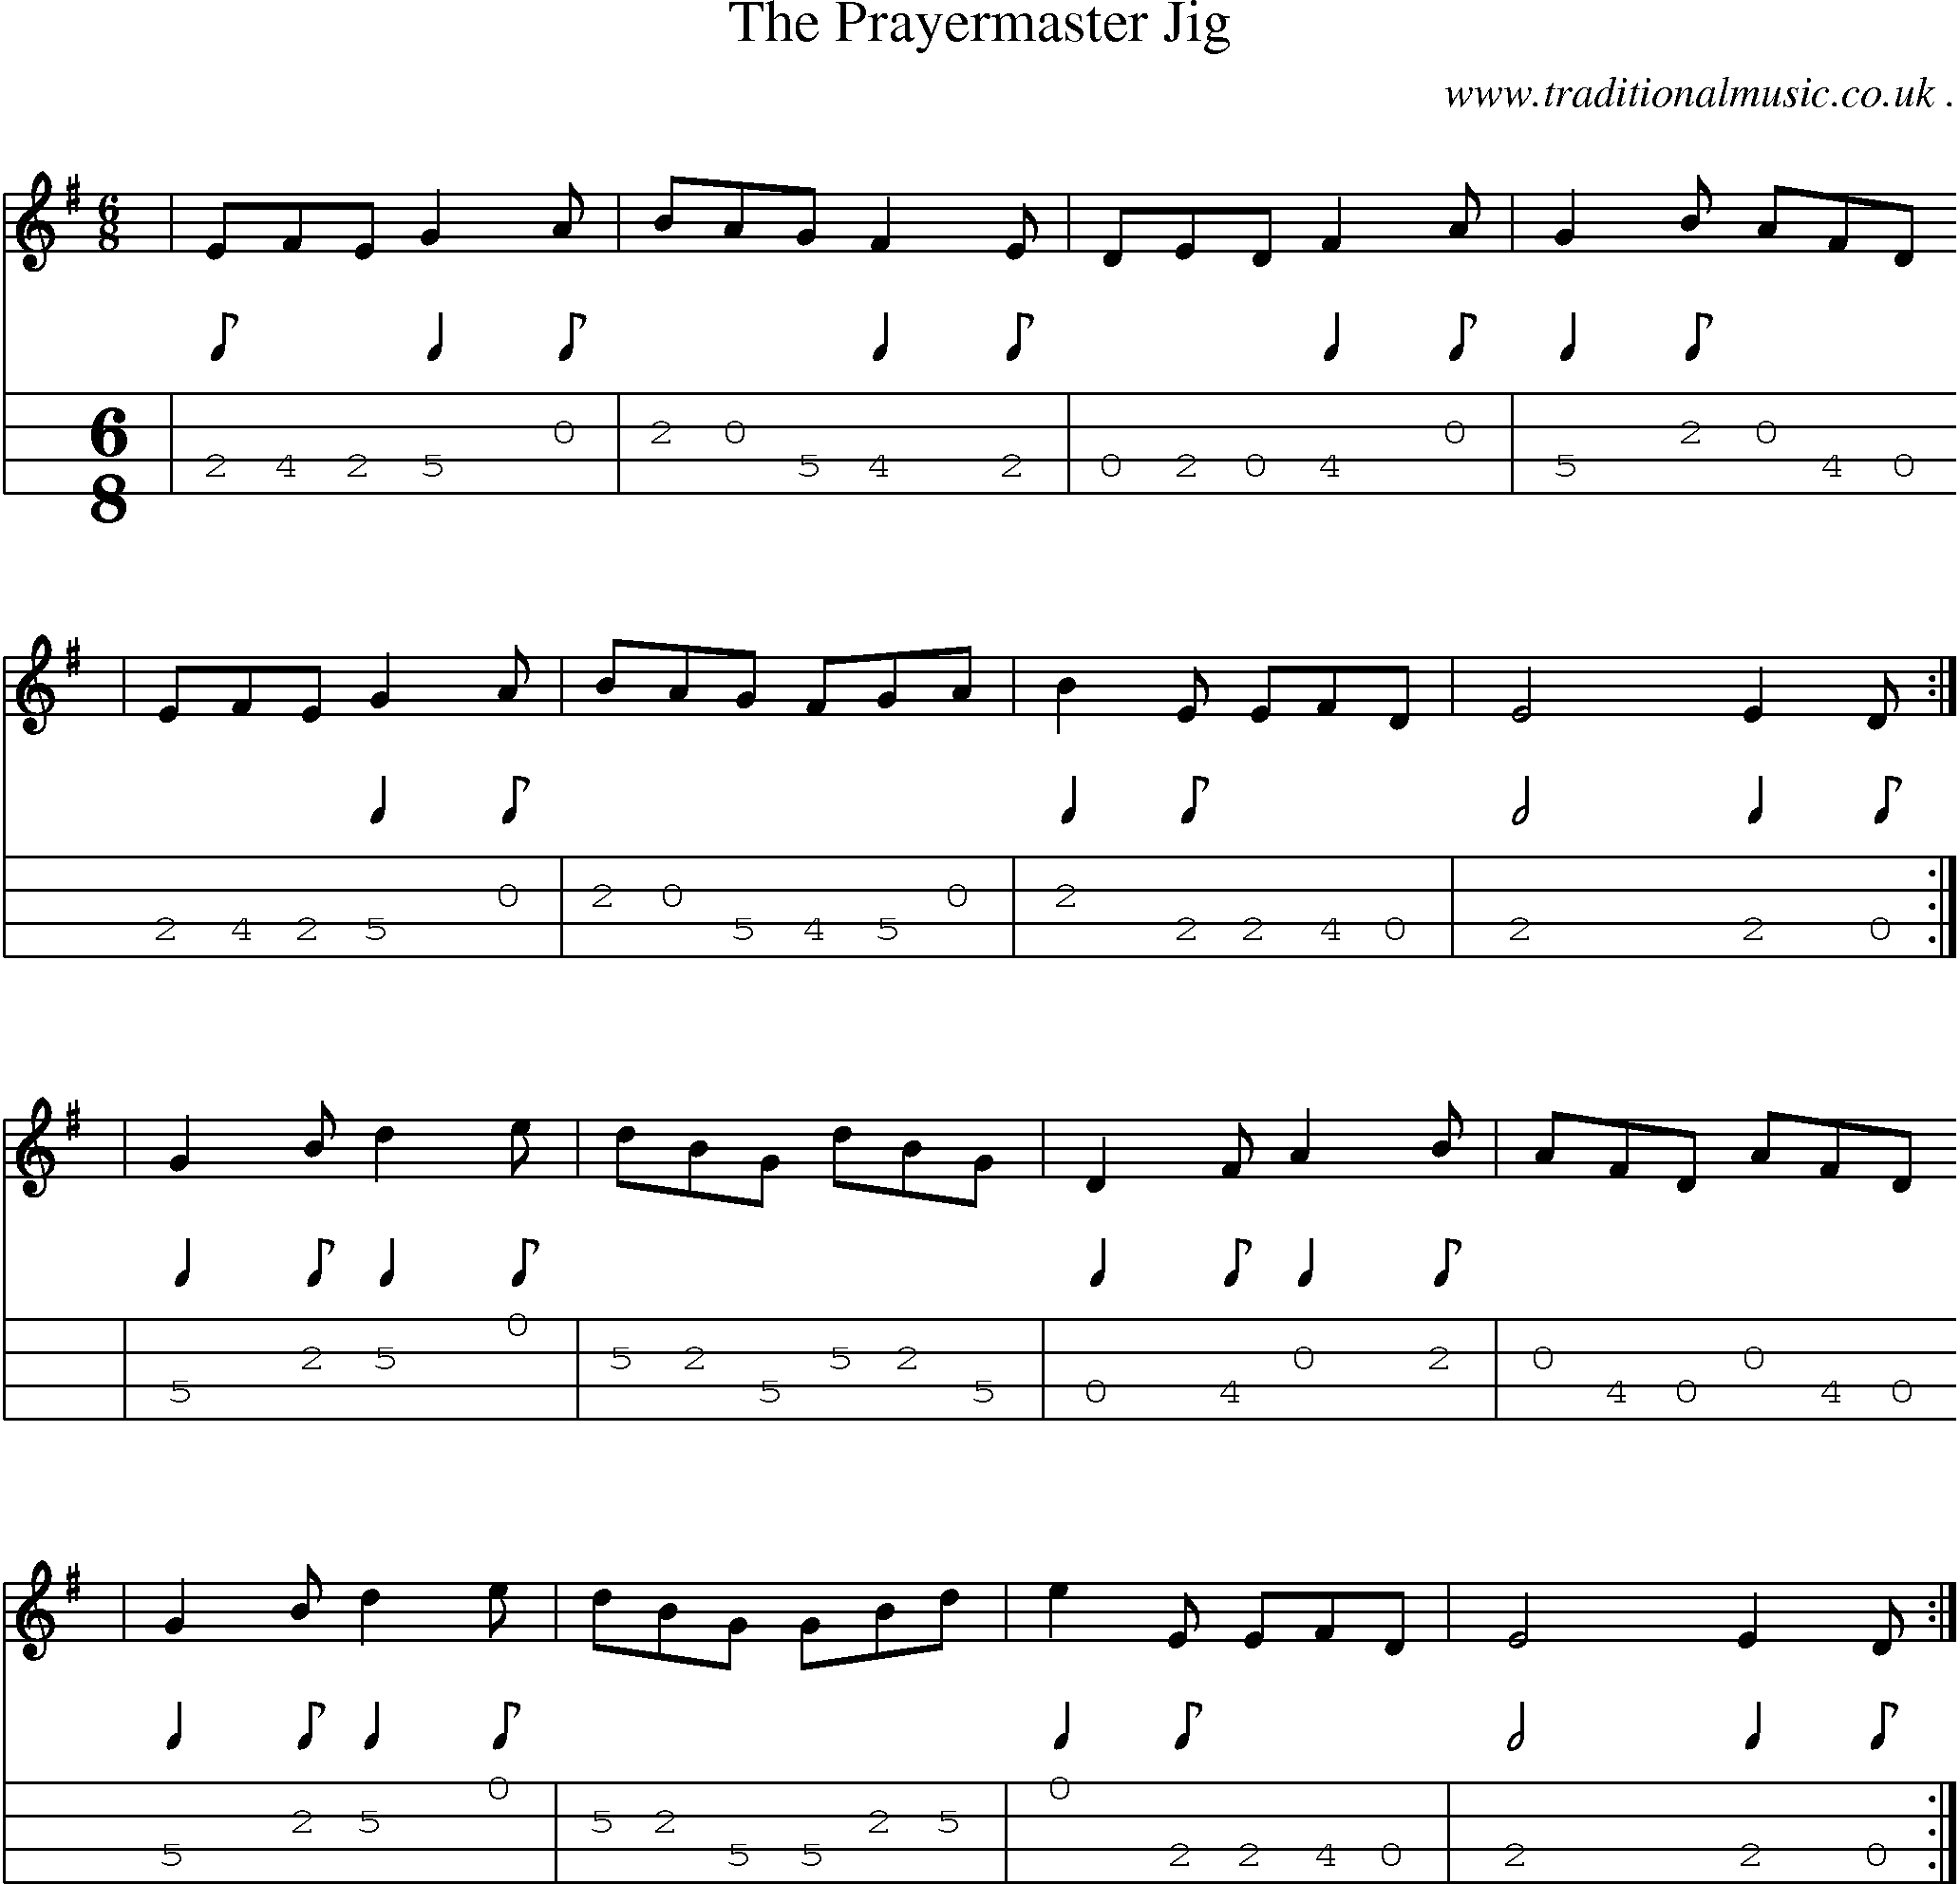 Sheet-Music and Mandolin Tabs for The Prayermaster Jig